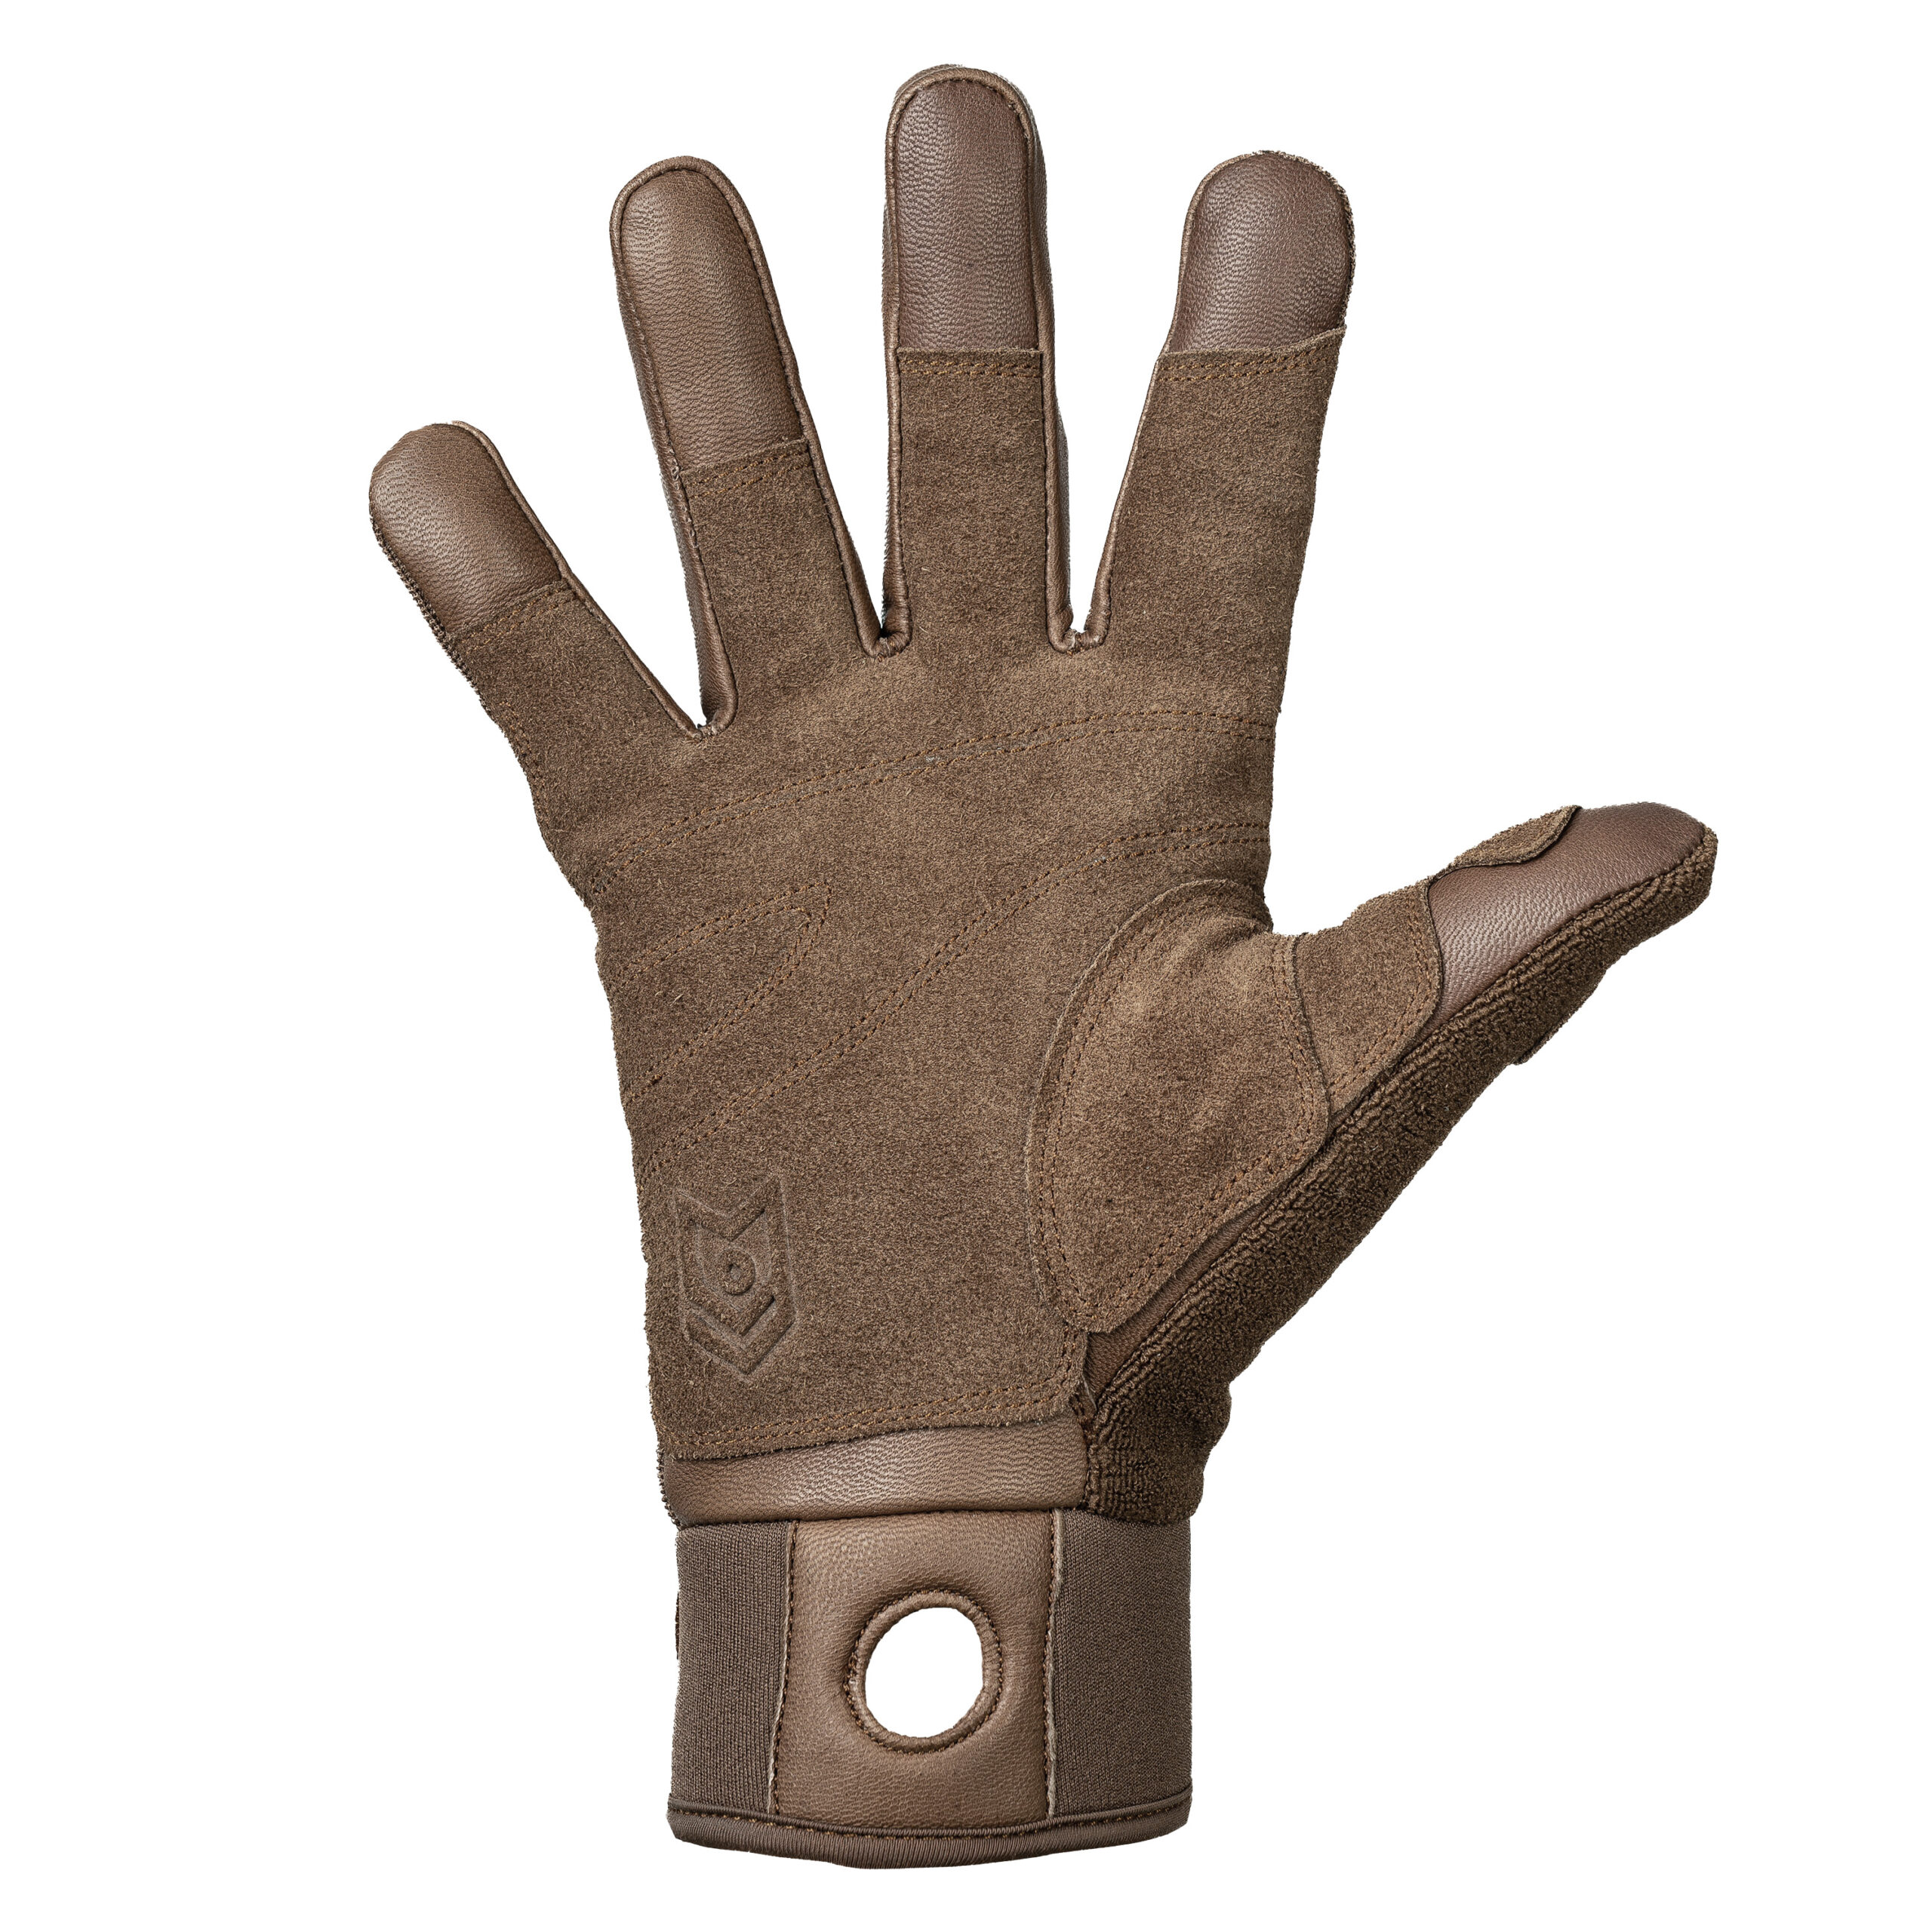 MoG Abseil/Rappel glove